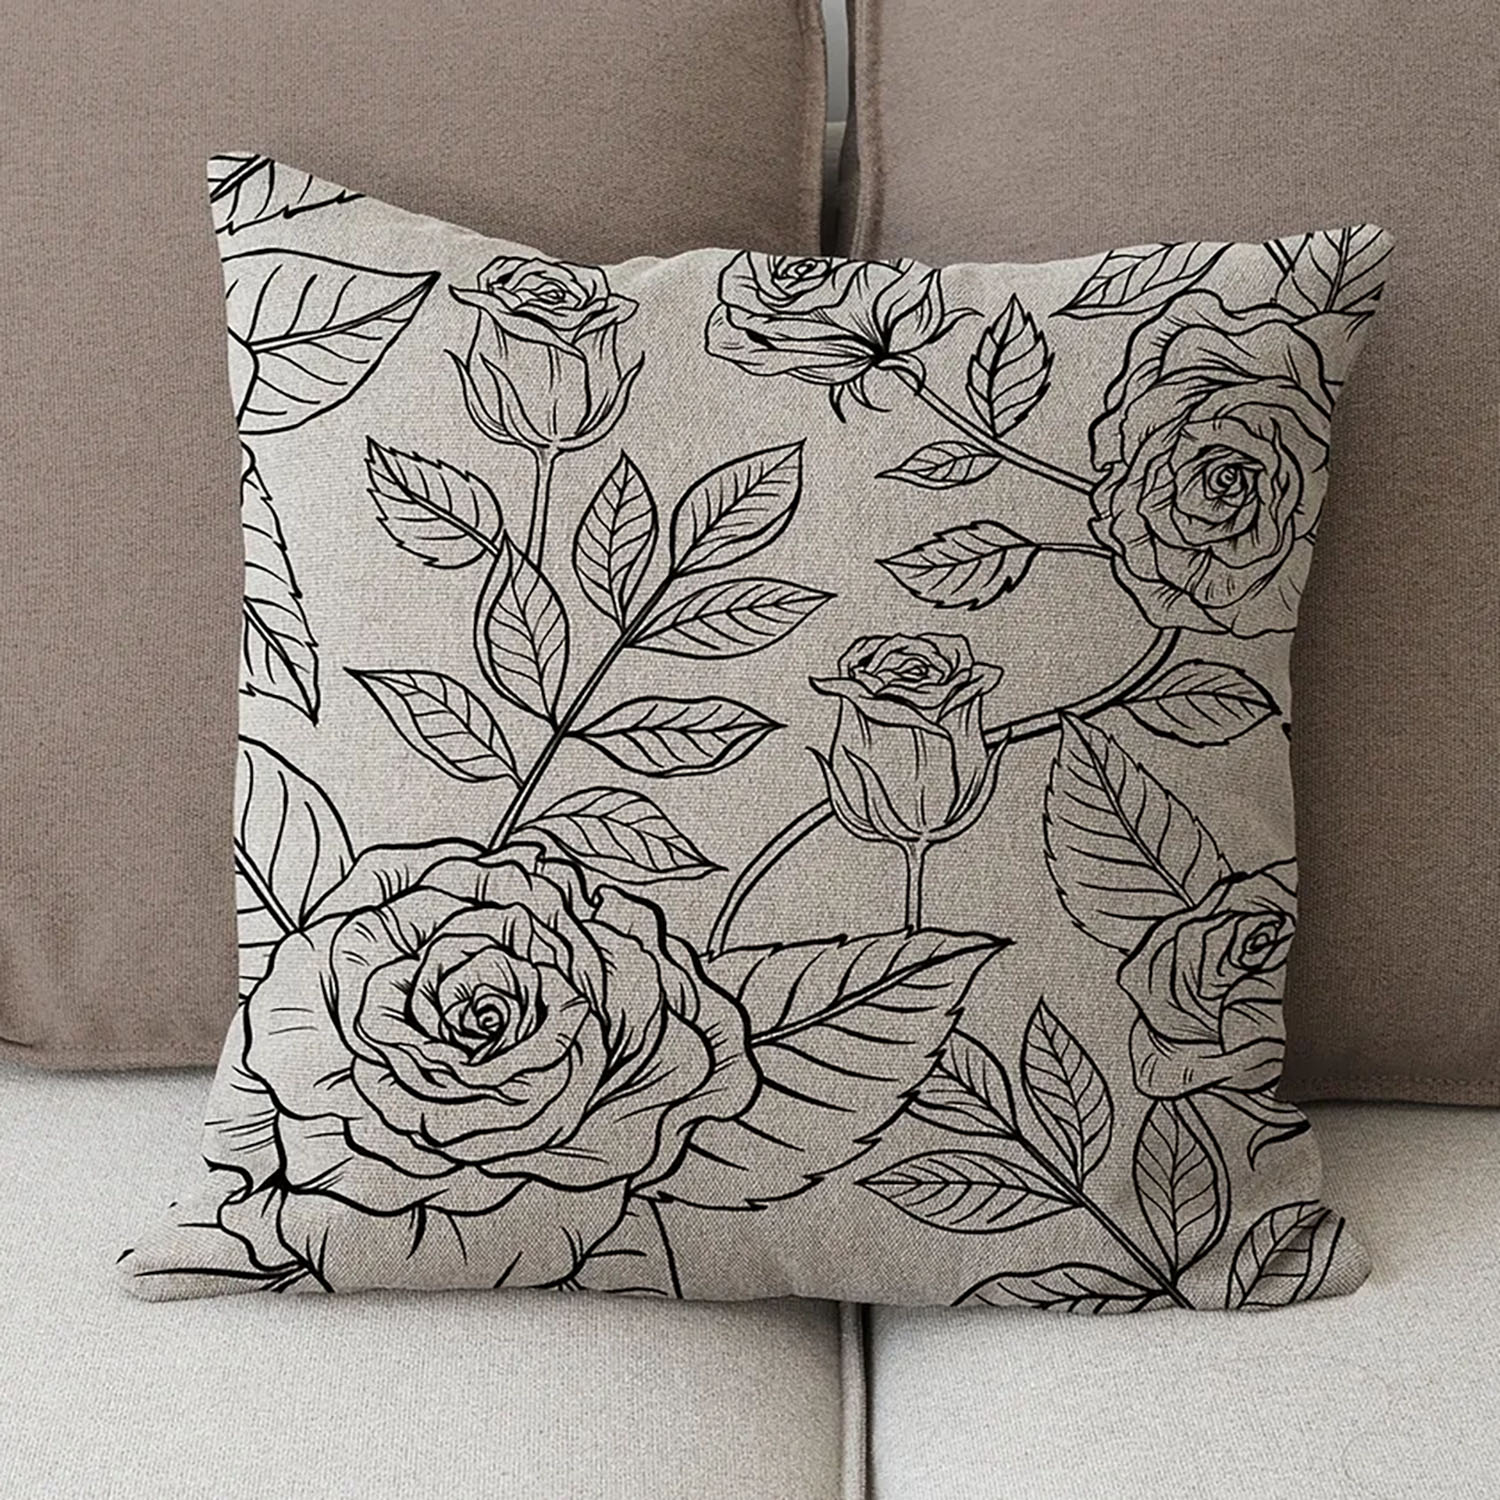 https://denniswisser.com/wp-content/uploads/2022/10/custom-printed-linen-cushion.jpg